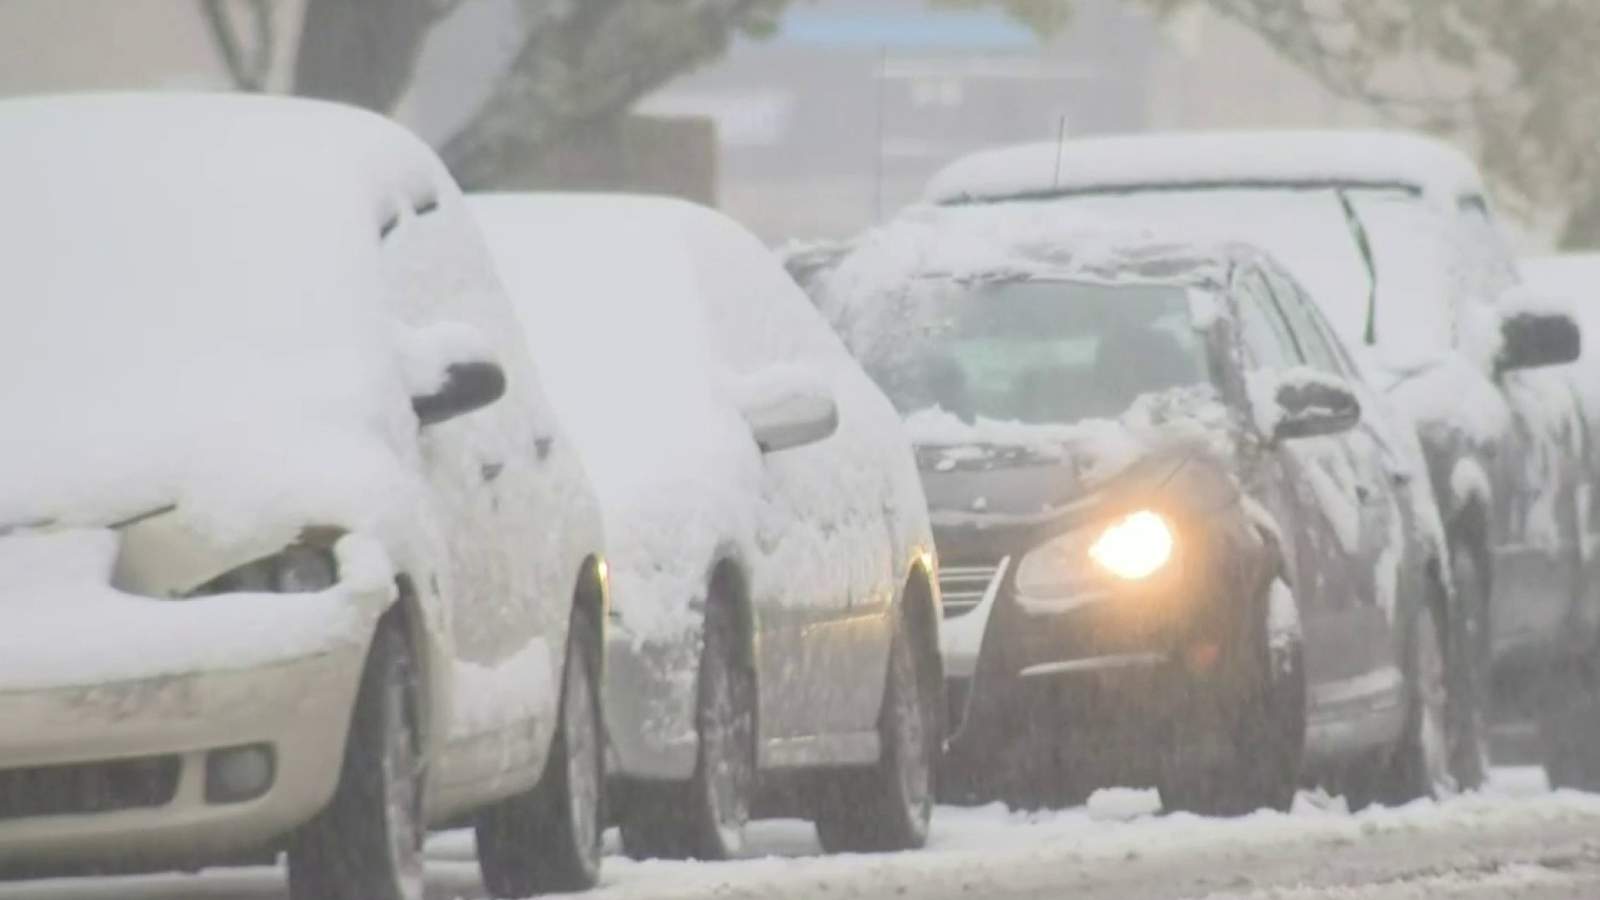 Metro Detroit Winter Weather Advisory: Becoming snowy overnight into Wednesday